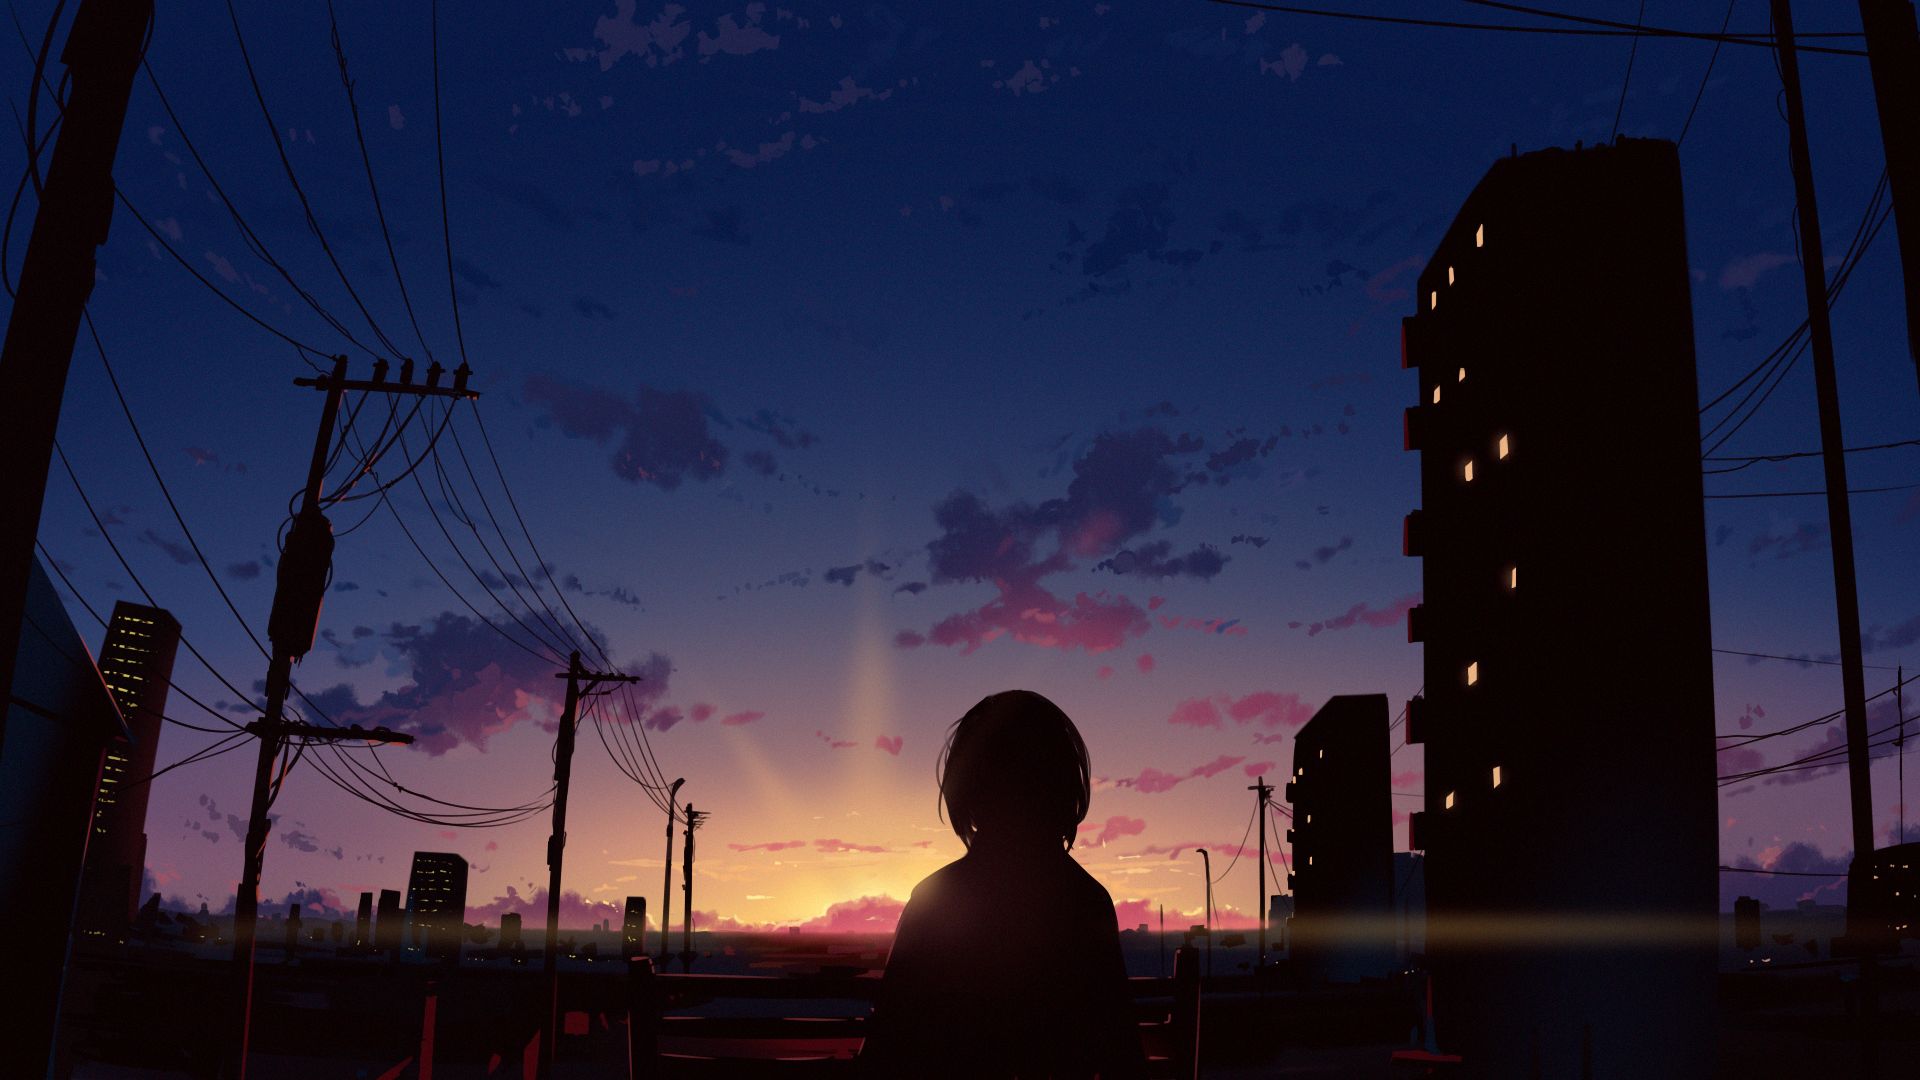 Anime Girl Enjoying Sunset Wallpaper, HD Anime 4K Wallpapers, Images and  Background - Wallpapers Den